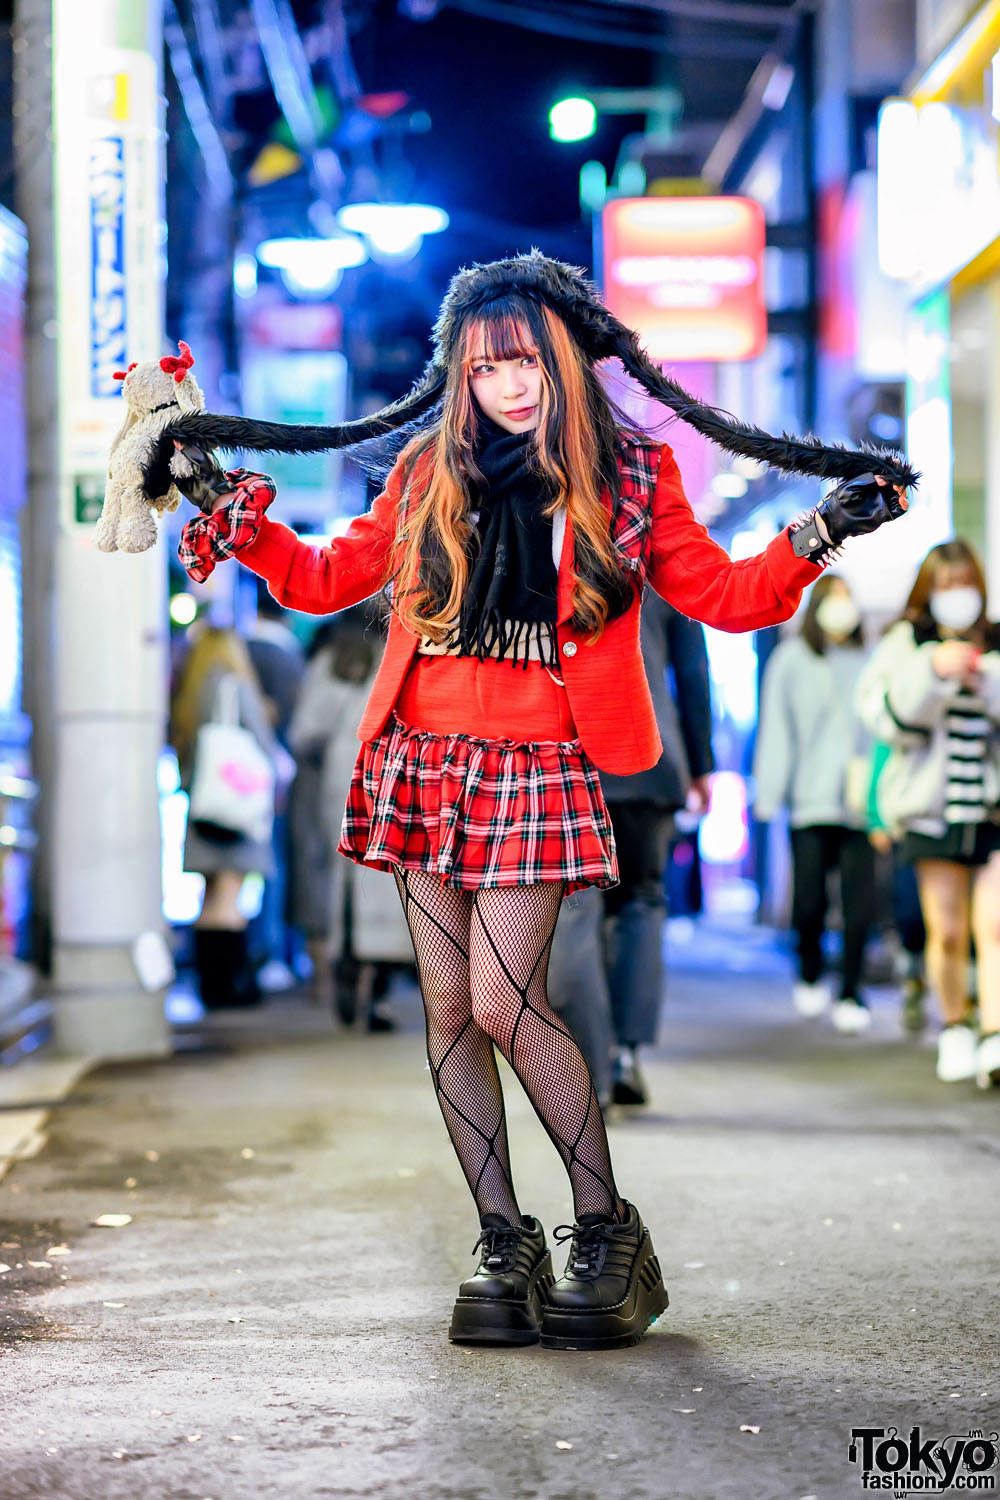 Harajuku Girl w/ Bunny in IKUMI Furry Hat, Red Blazer, Plaid Mini Skirt, Fishnets, and Platforms